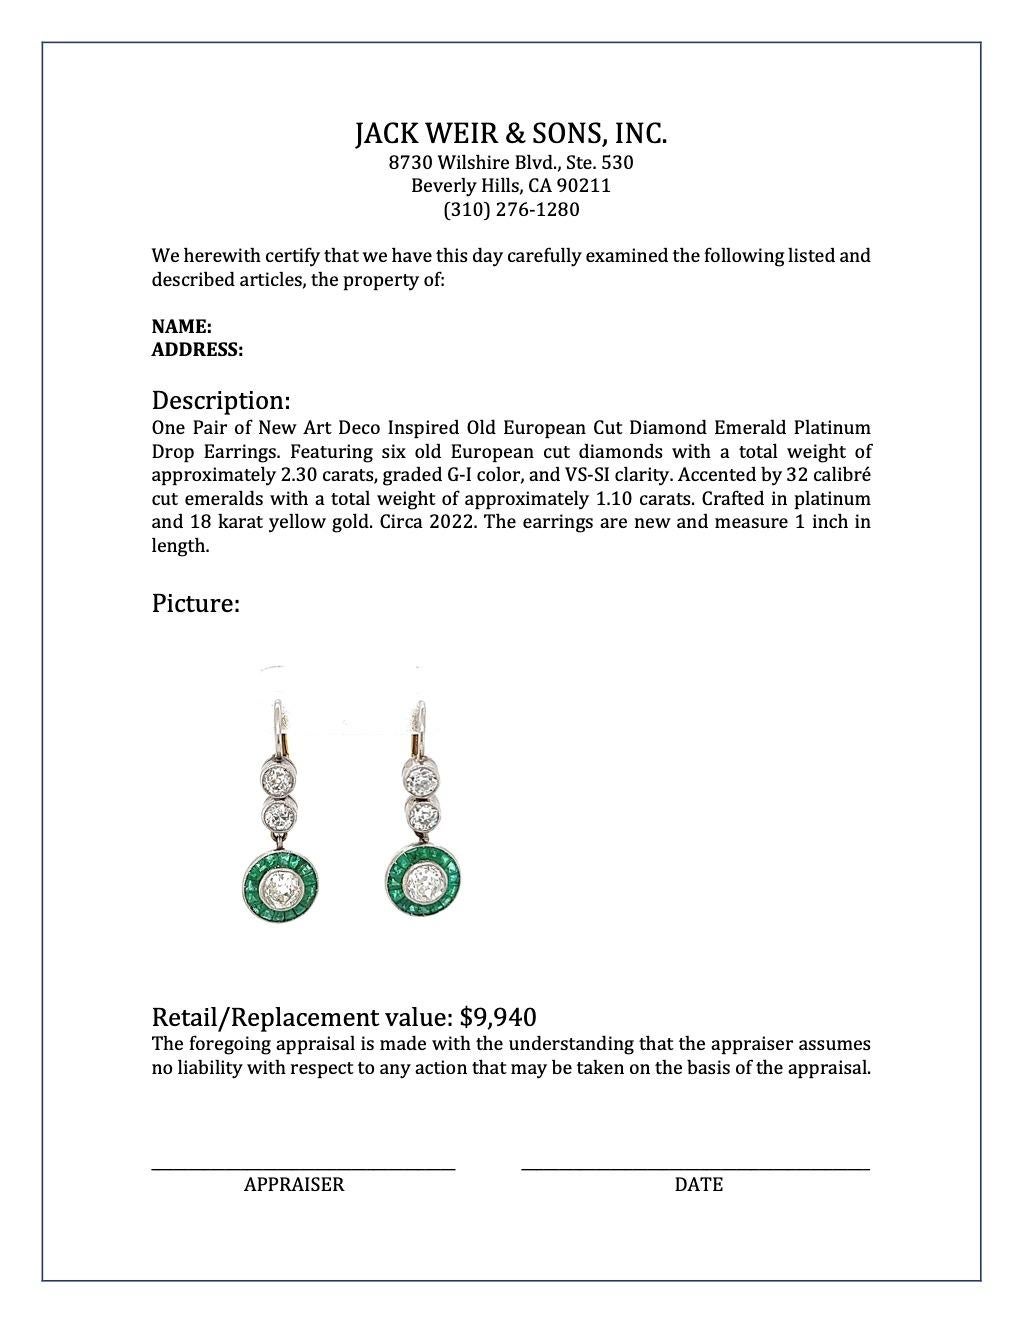 Art Deco Inspired Old European Cut Diamond Emerald Platinum Drop Earrings 4